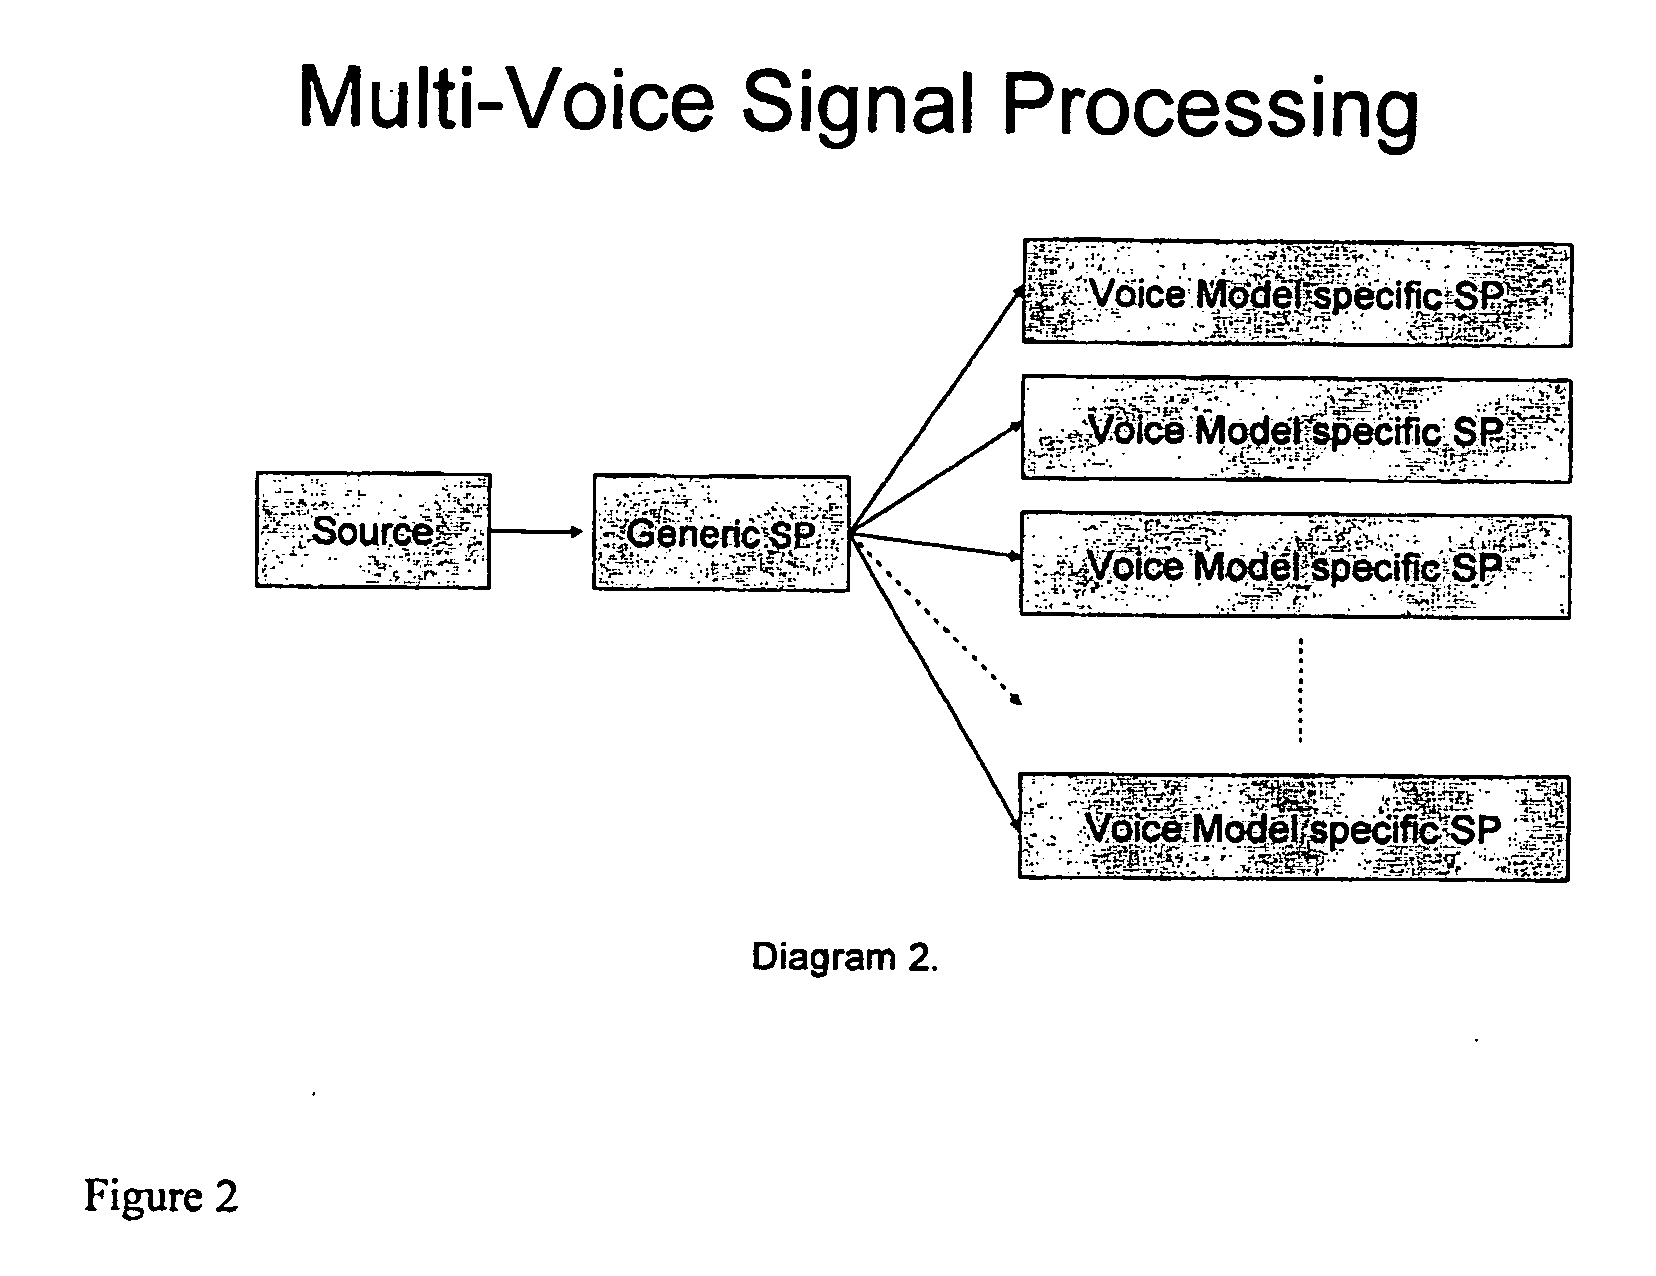 Multi-voice speech recognition